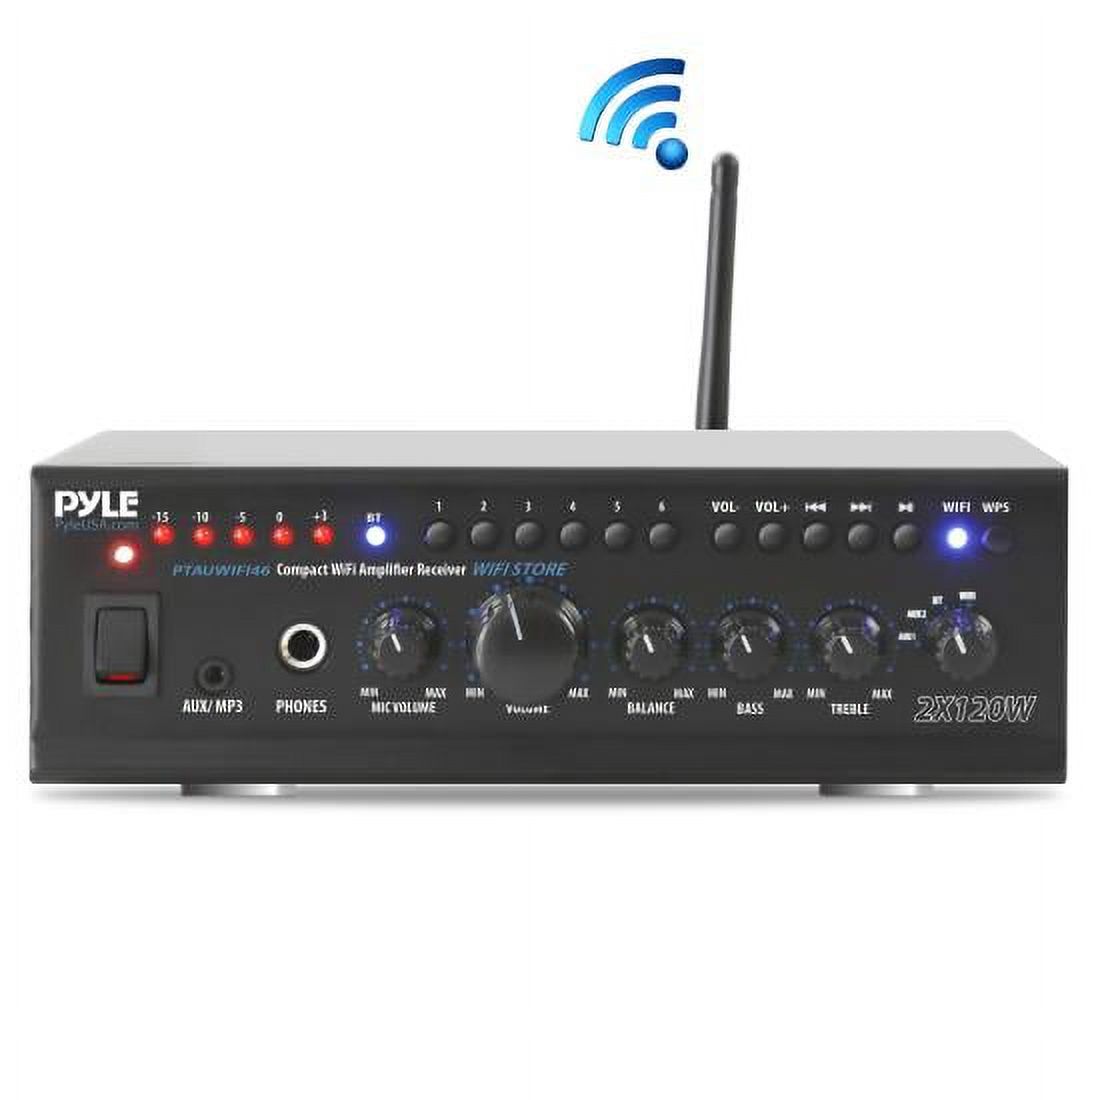 Pyle PTAUWIFI46 WiFi Bluetooth Stereo Amplifier 240-Watt Home Theatre Receiver, 4x Pyle 3.5" 200 Watt 3-Way Weatherproof Mini Box Speakers (White), Enrock Audio Spool of 50 Foot 16-Gauge Speaker Wire - image 2 of 6